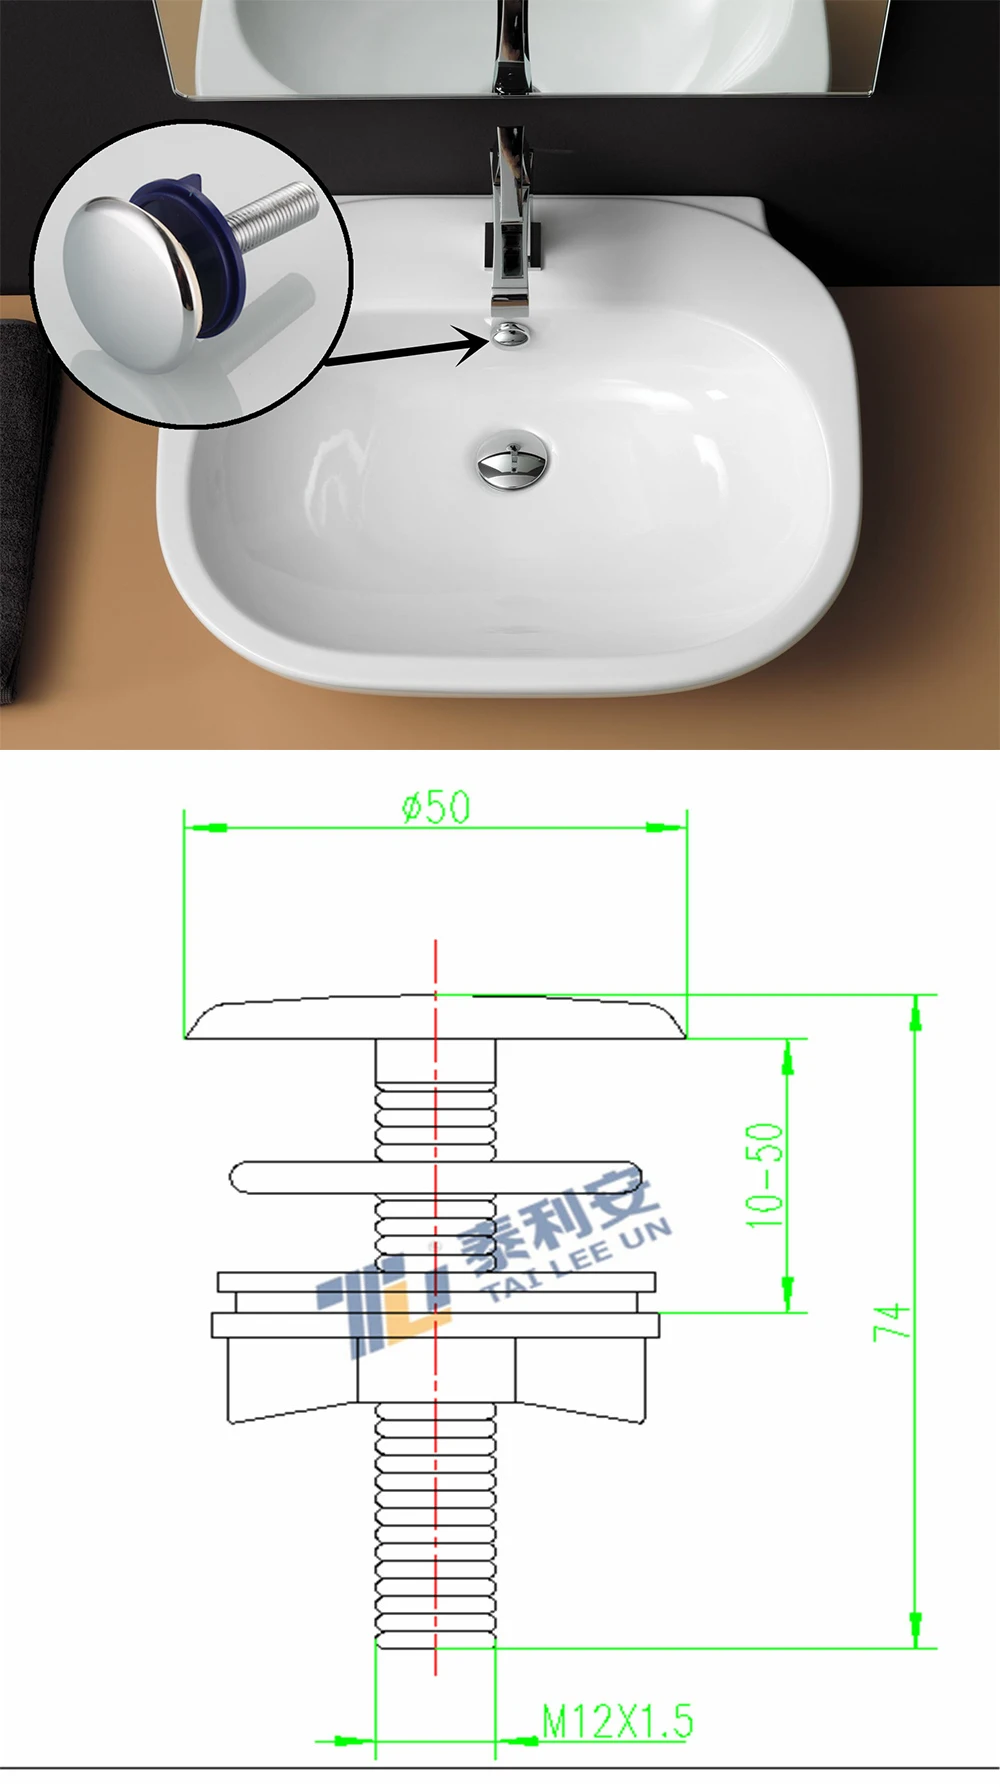 Sanitarios Flow Controller Bathroom Sink Basin Overflow Cap Water Drain Hole Cover Buy Drain Hole Cover Water Drain Cover Basin Overflow Cap Product